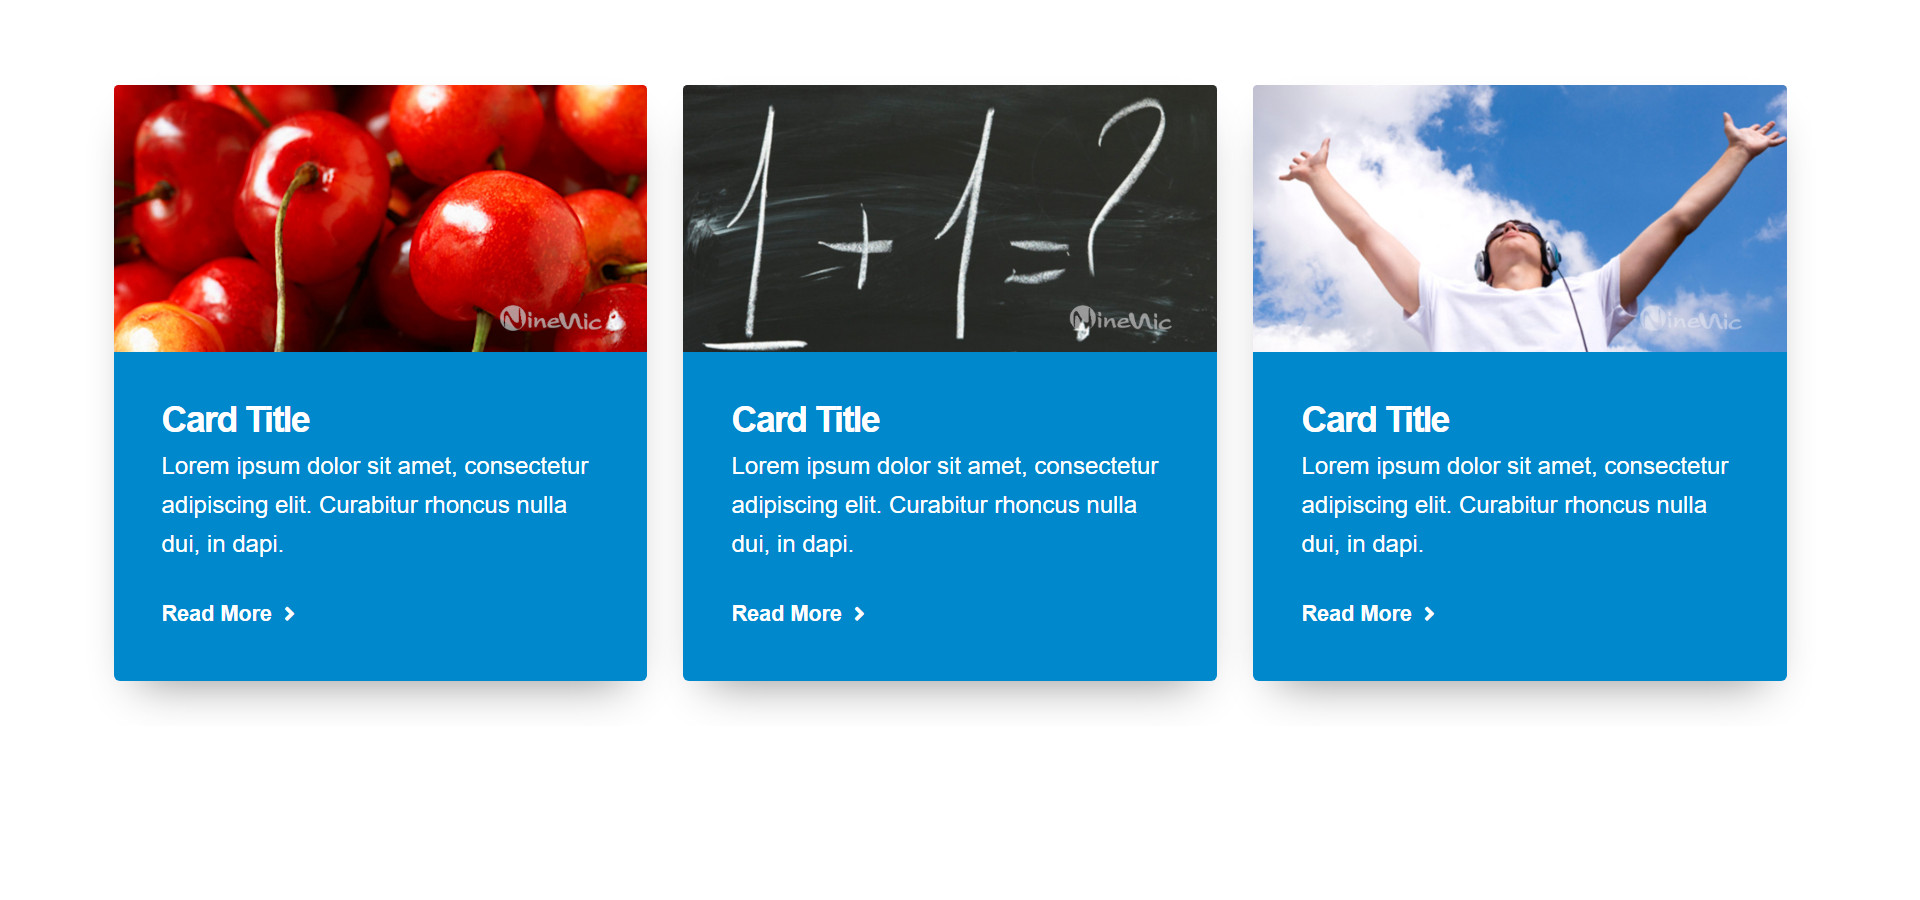 Shortcodes cards - shadow-3-images-top-bg-color-primary-3-column แนะนำ เว็บไซต์สำเร็จรูป NineNIC